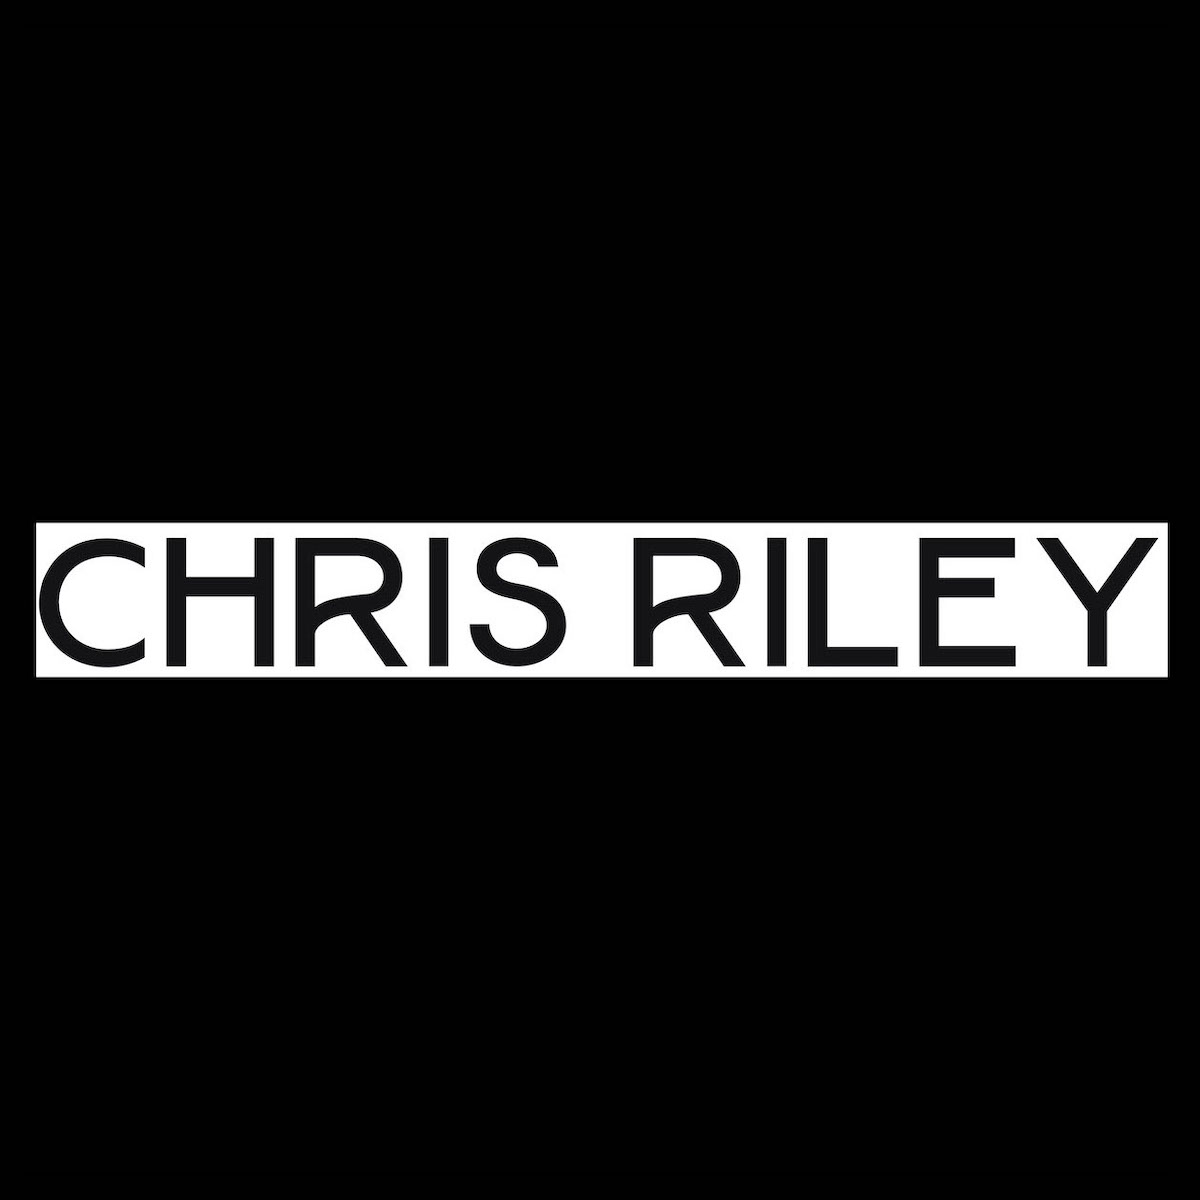 Chris Riley